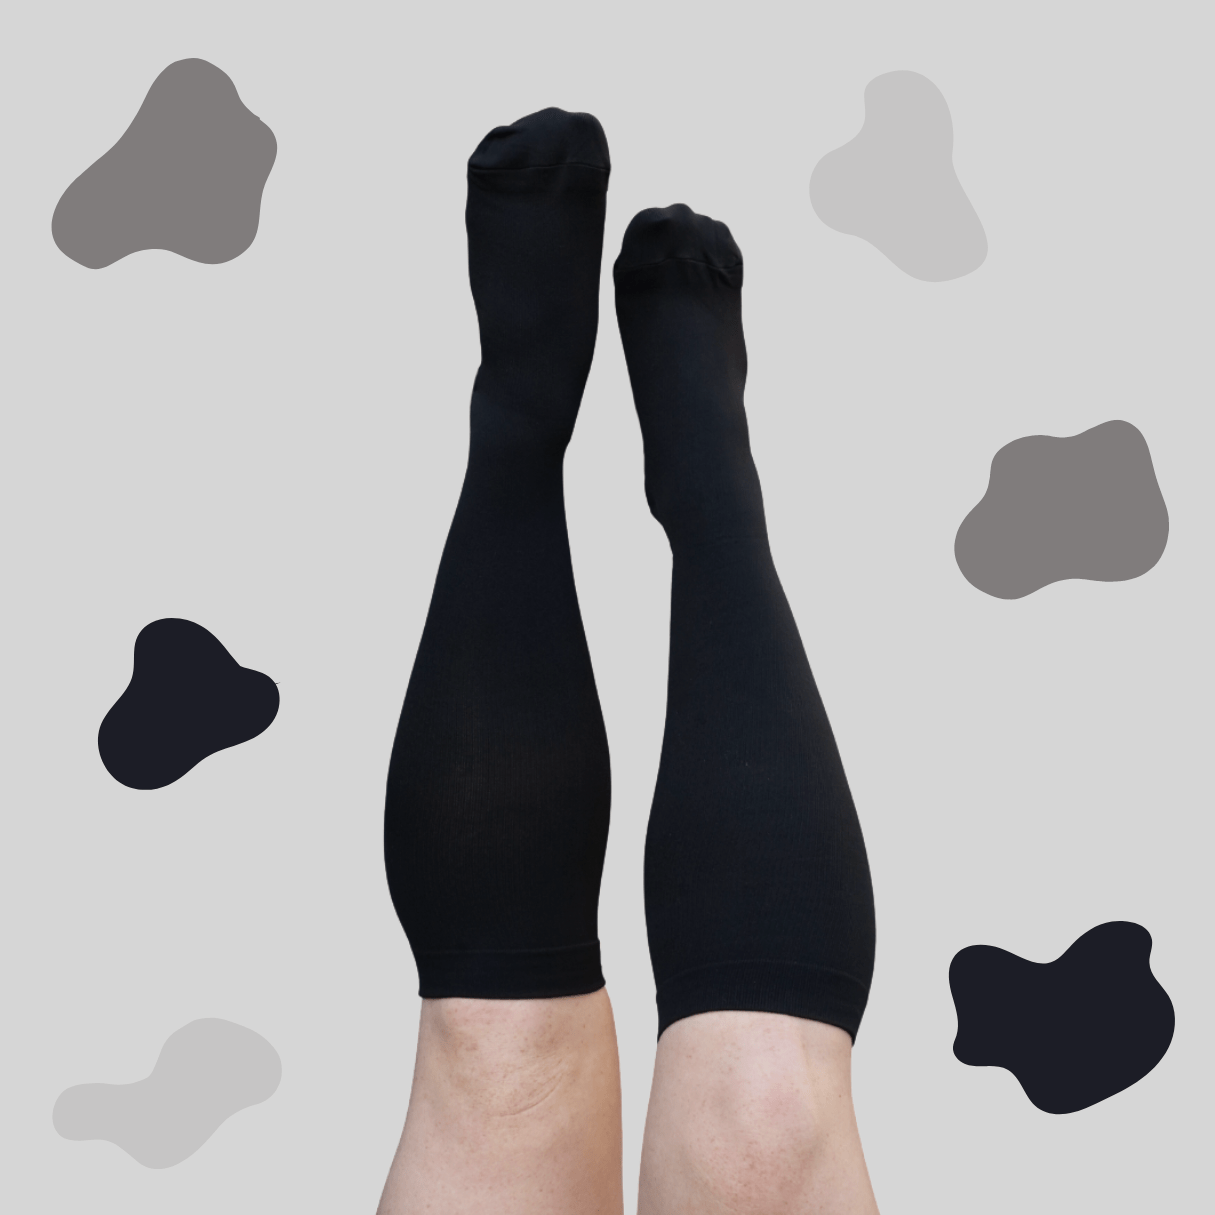 Compression Socks Plus Size Women